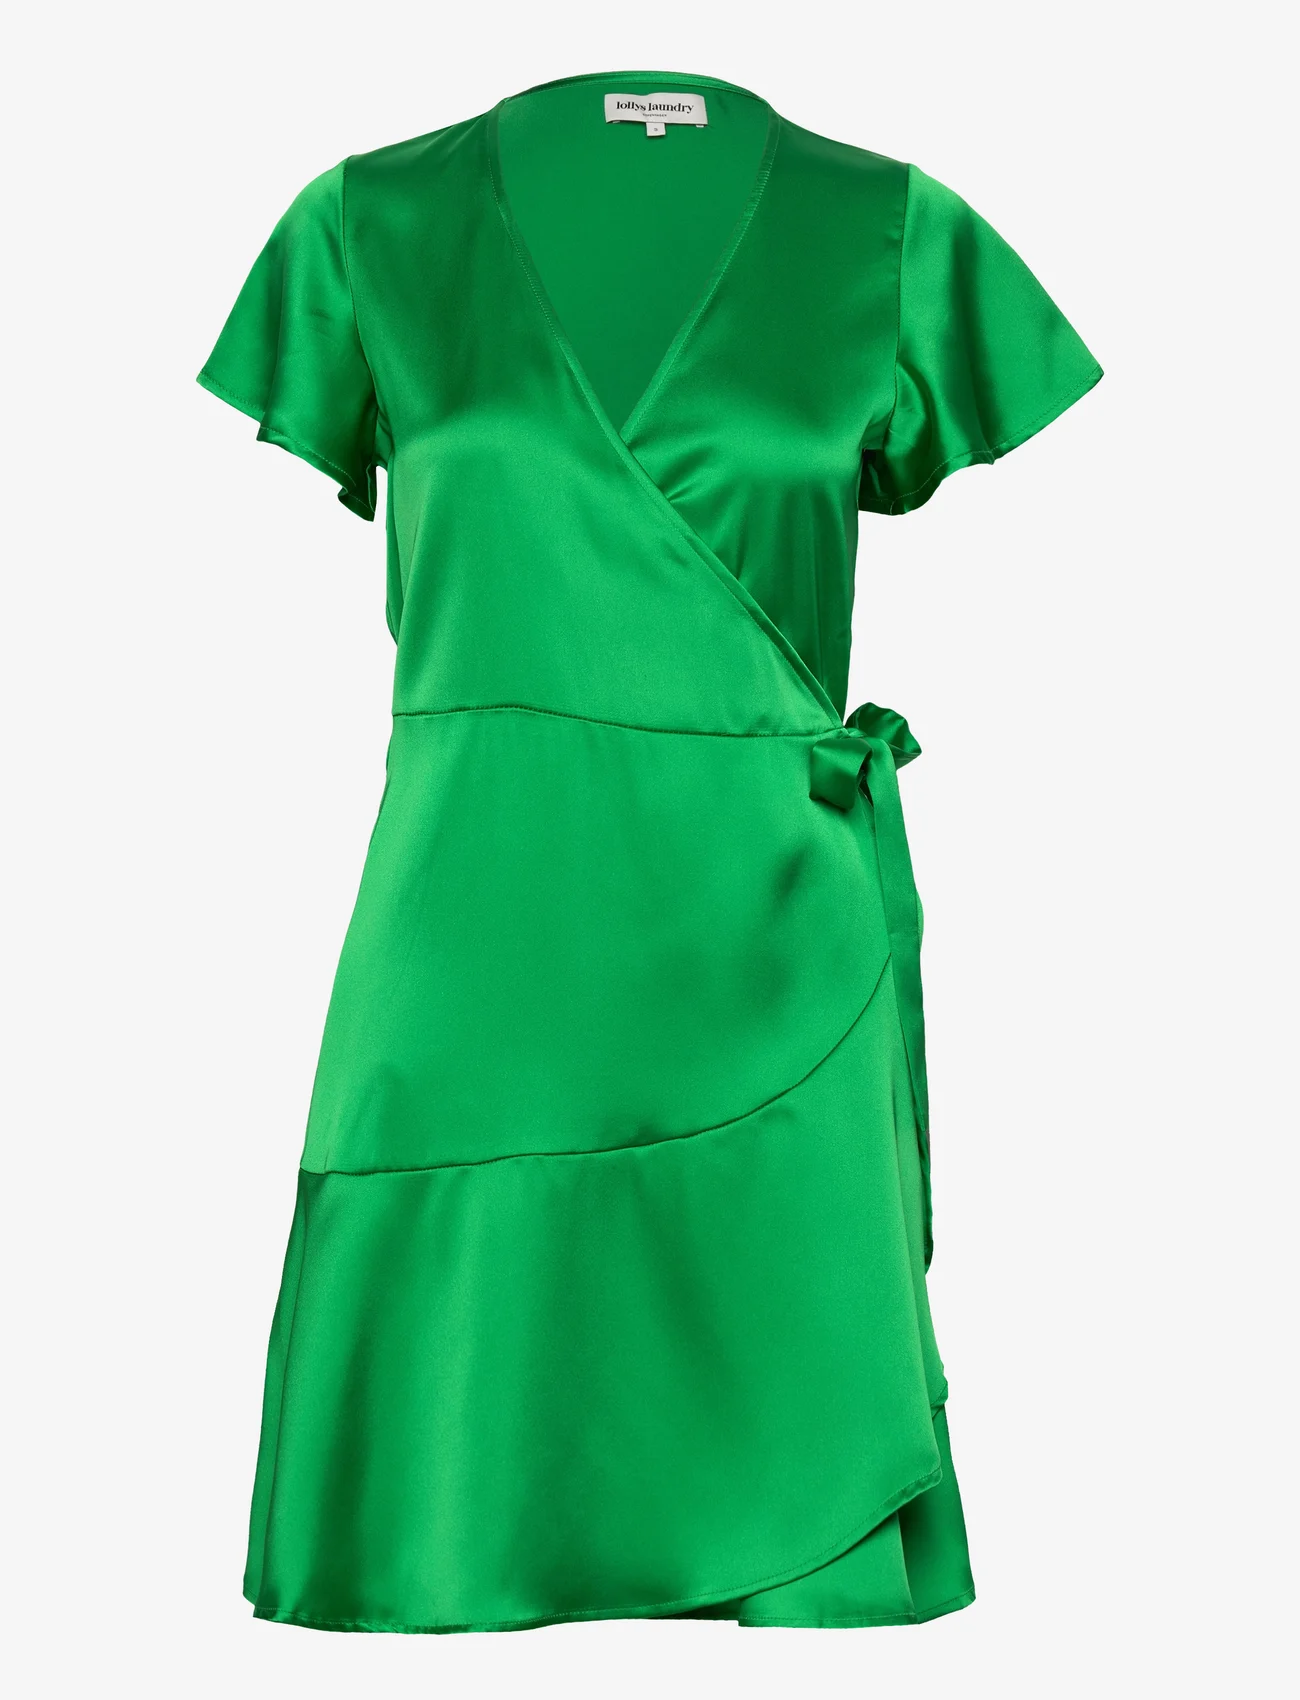 Lollys Laundry - Miranda Wrap around dress - festmode zu outlet-preisen - green - 0